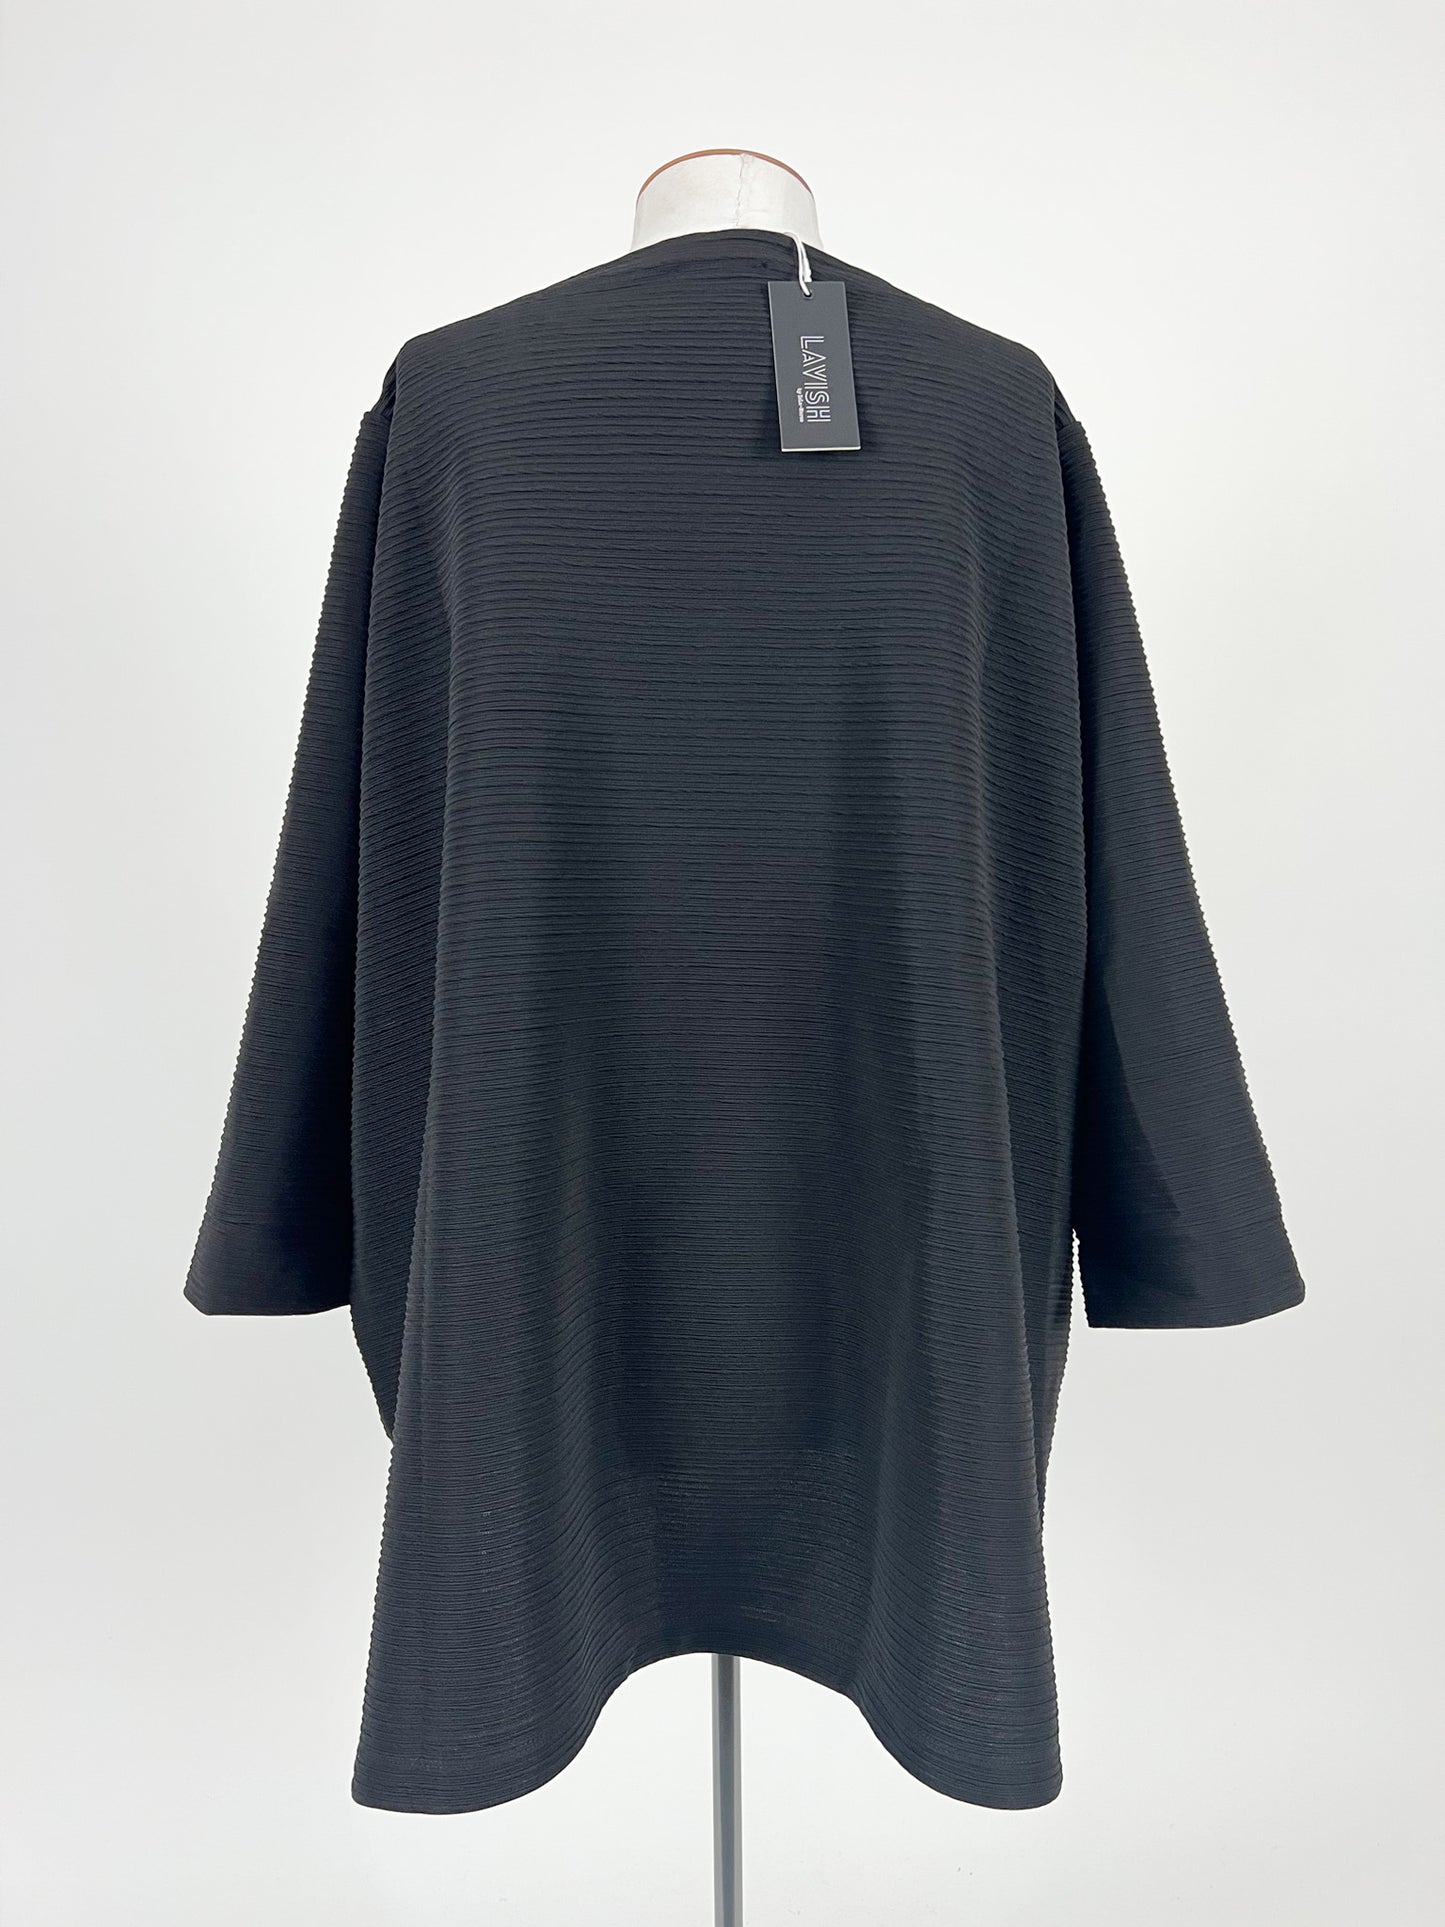 Lavish | Black Casual/Workwear Top | Size L